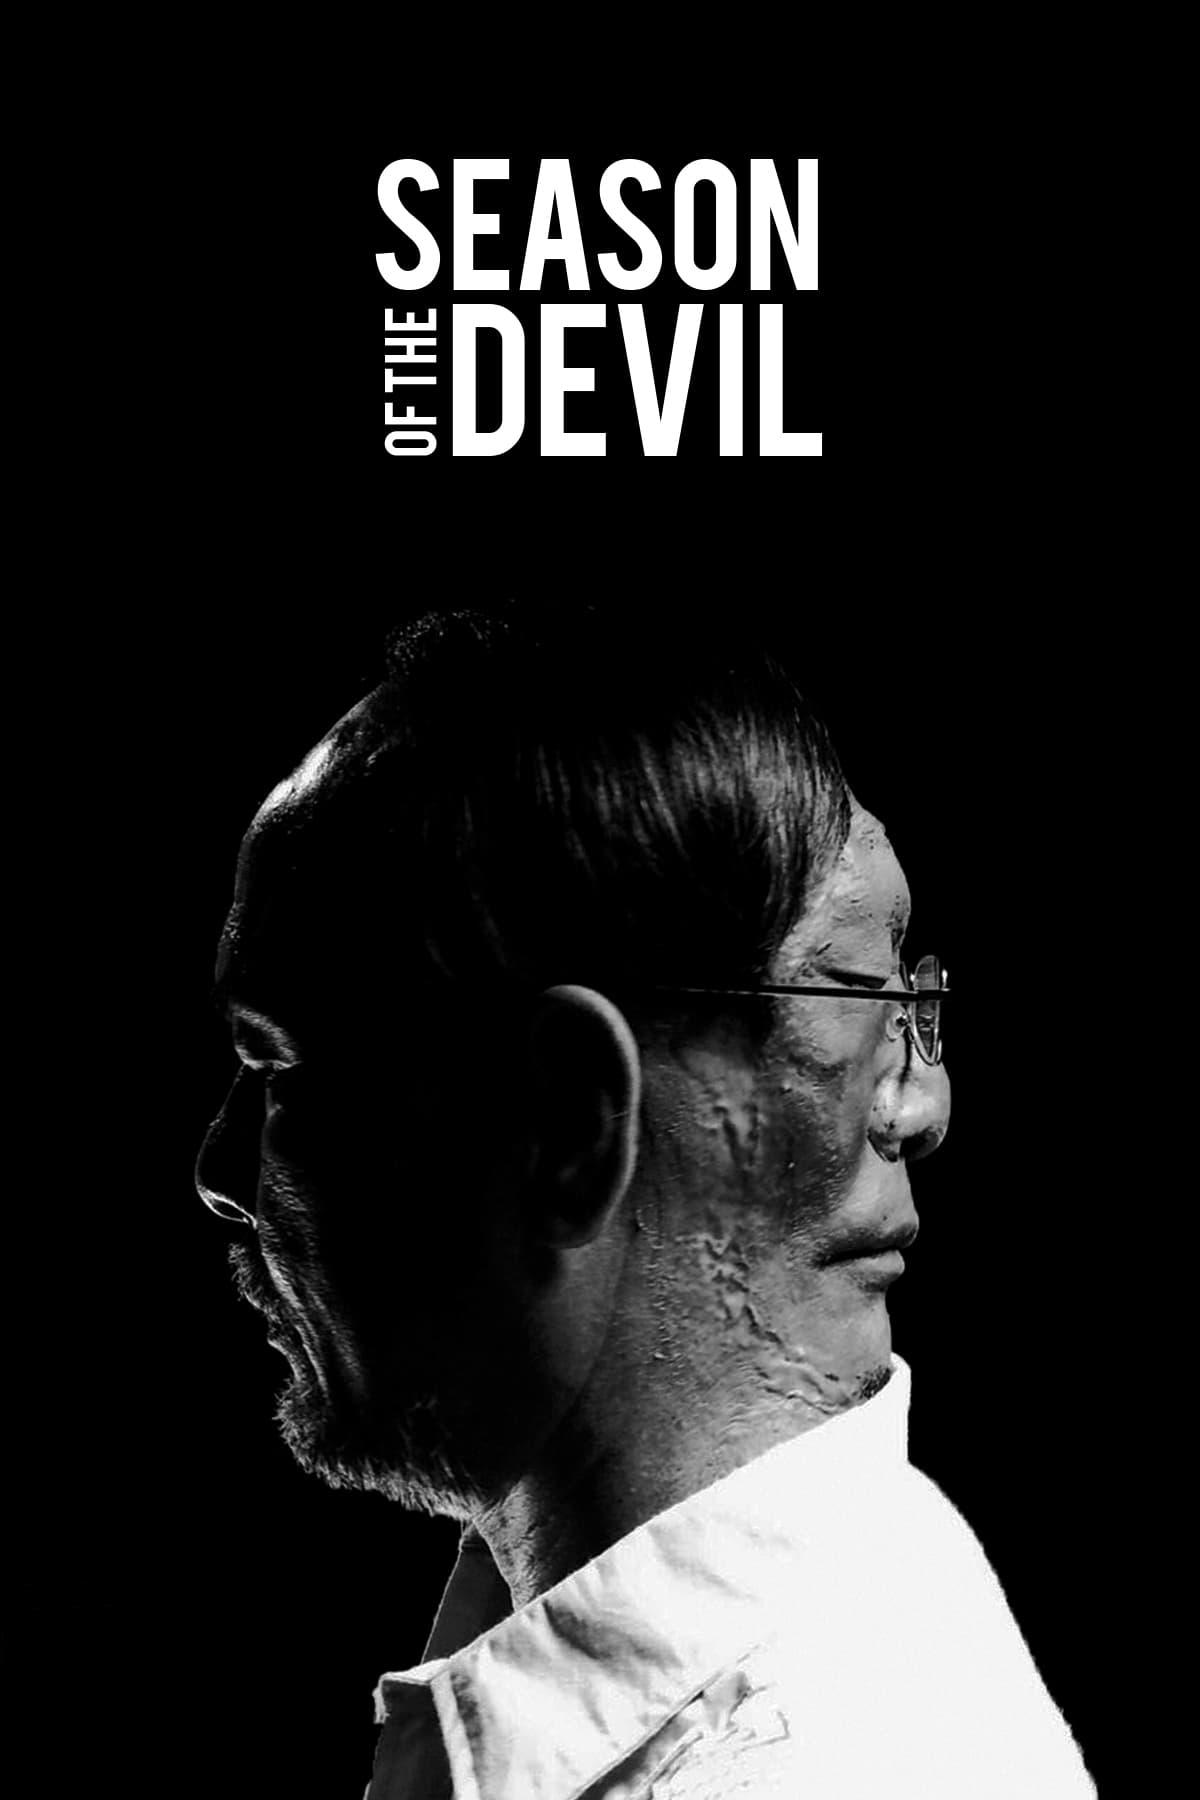 Season of the Devil poster